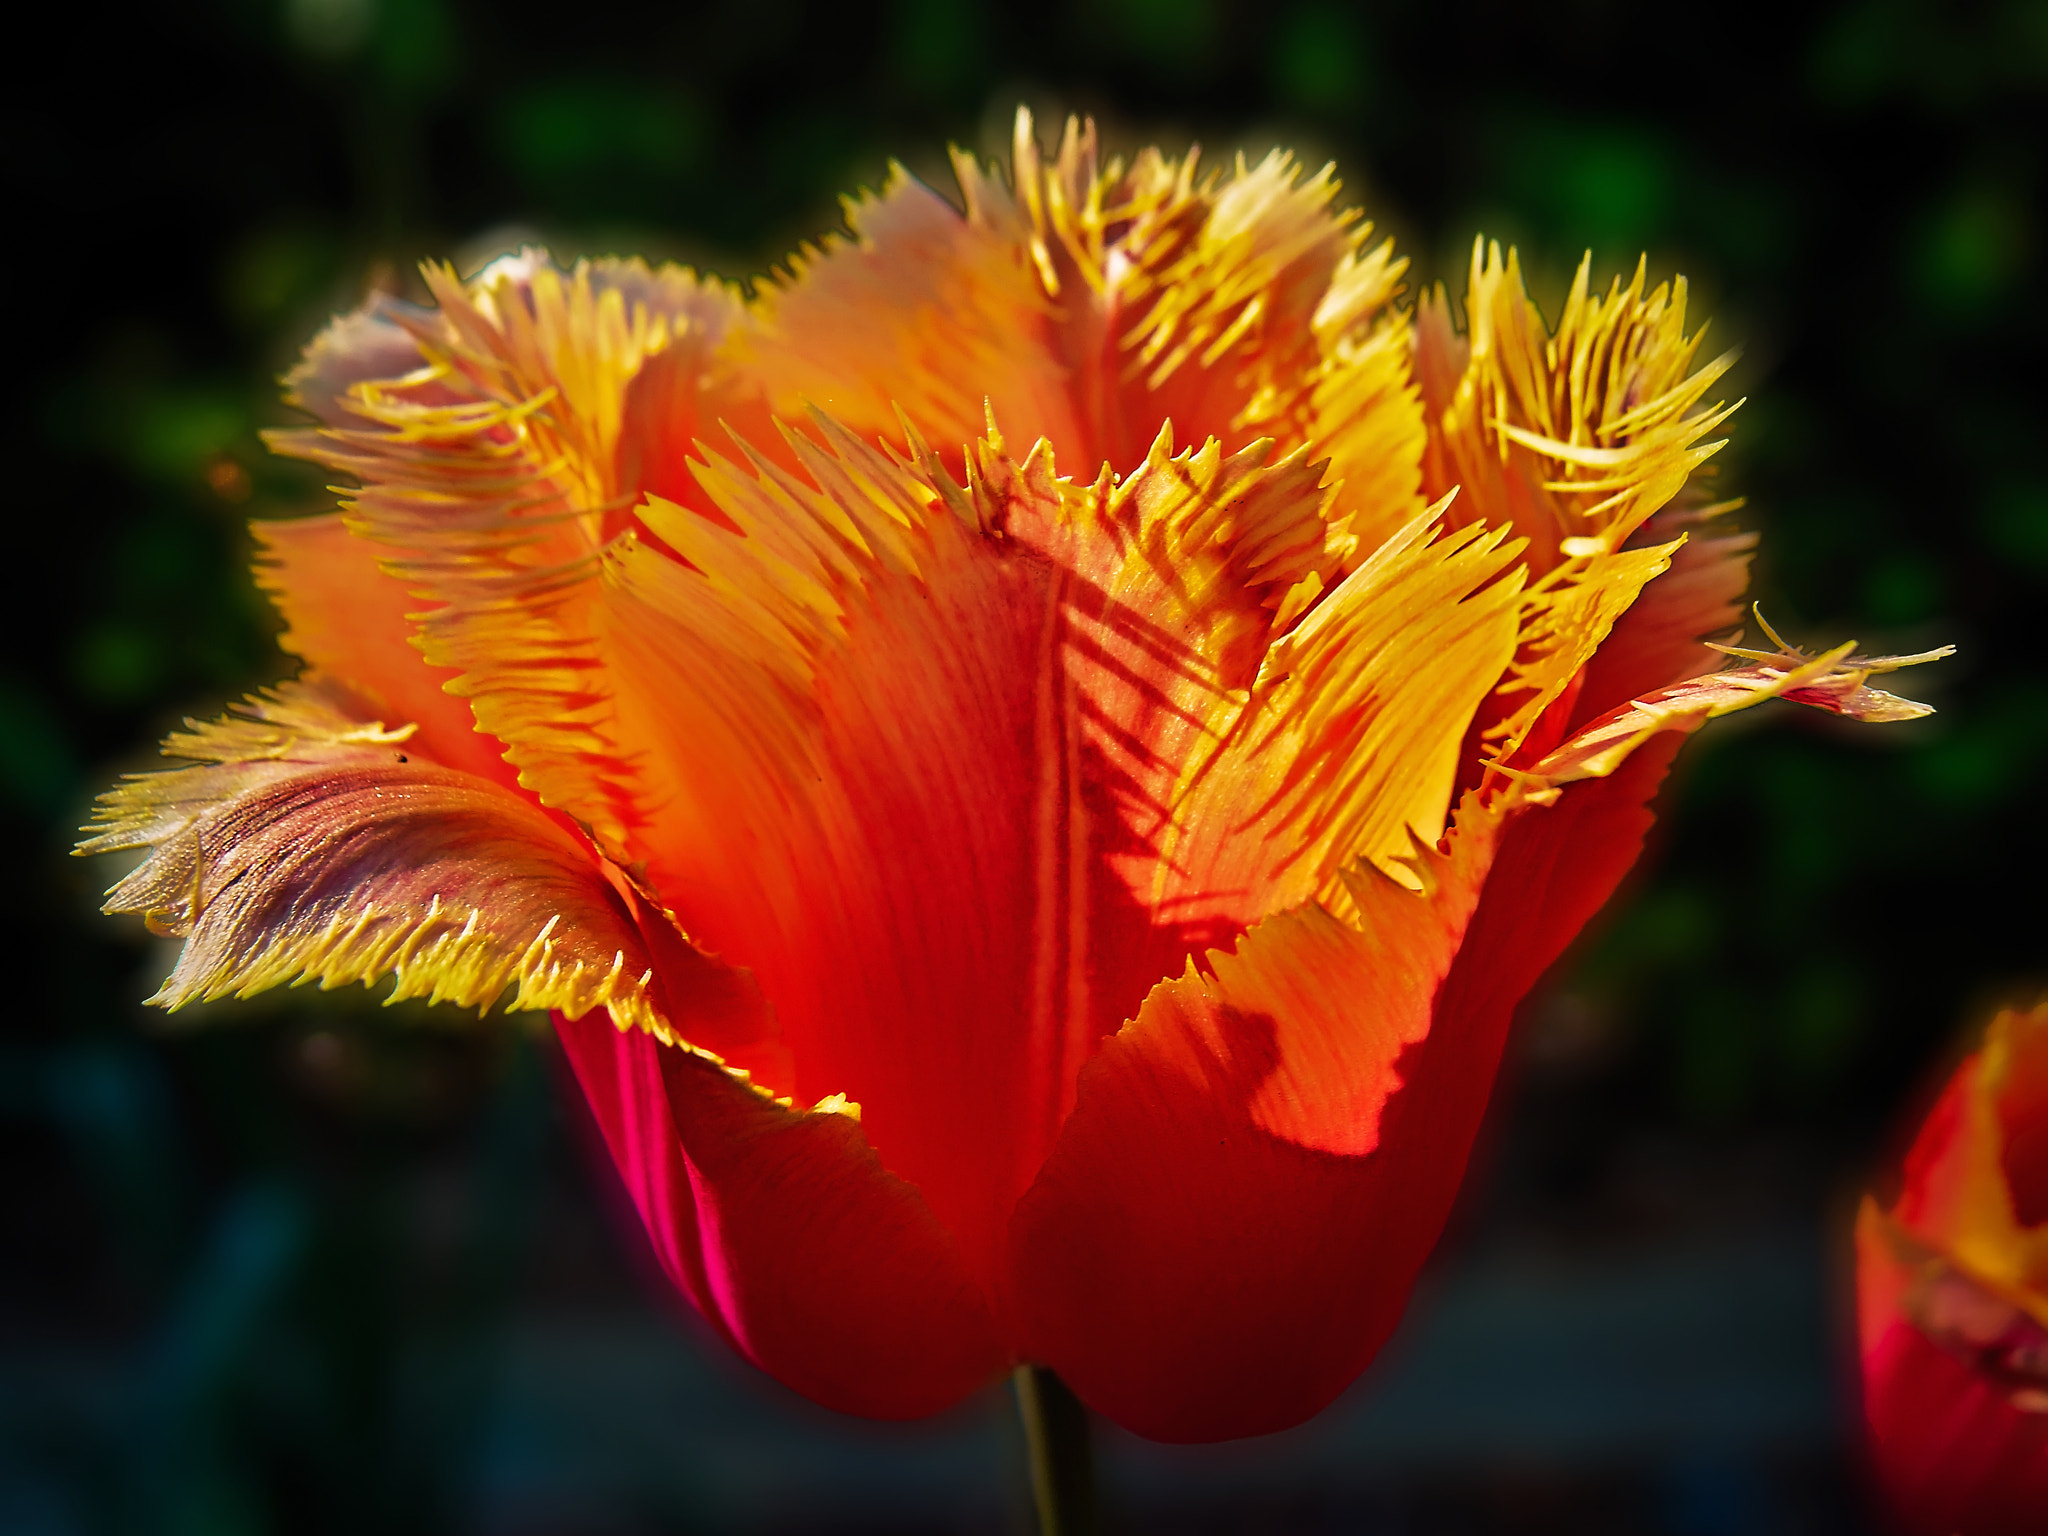 Olympus XZ-2 iHS sample photo. Bloom tulip photography